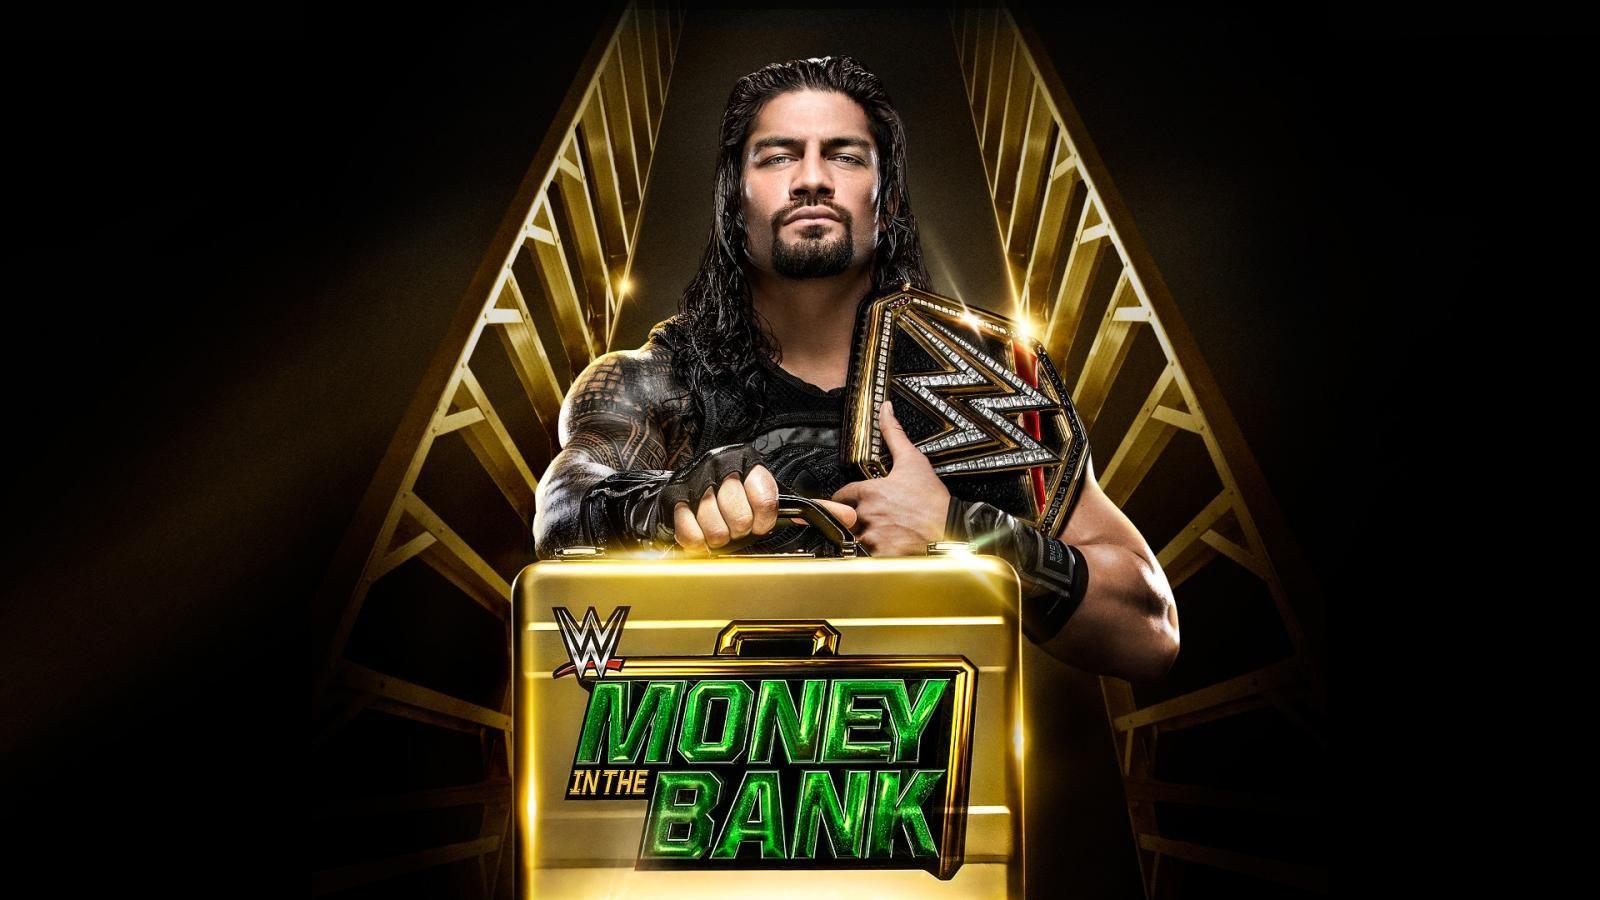 WWE Events. Wwe money, Wwe roman reigns